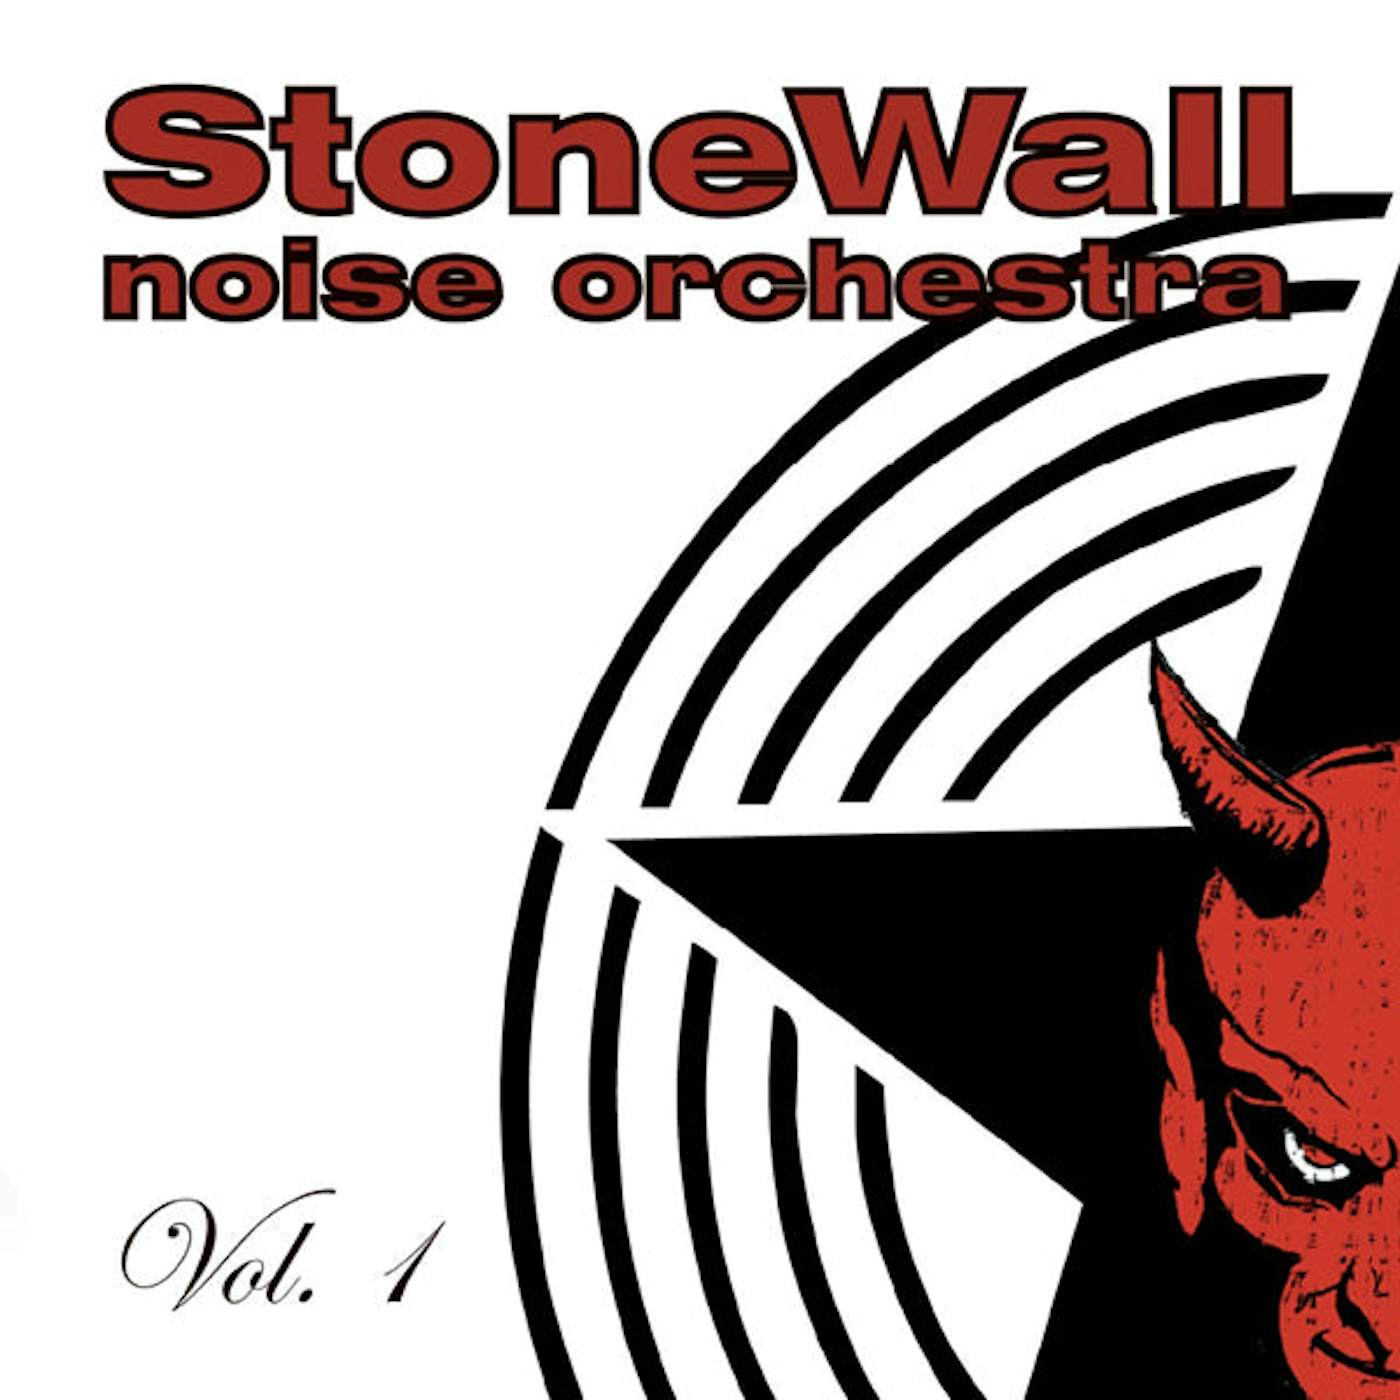 Stonewall Noise Orchestra LP - Vol. 1 (Coloured Vinyl)